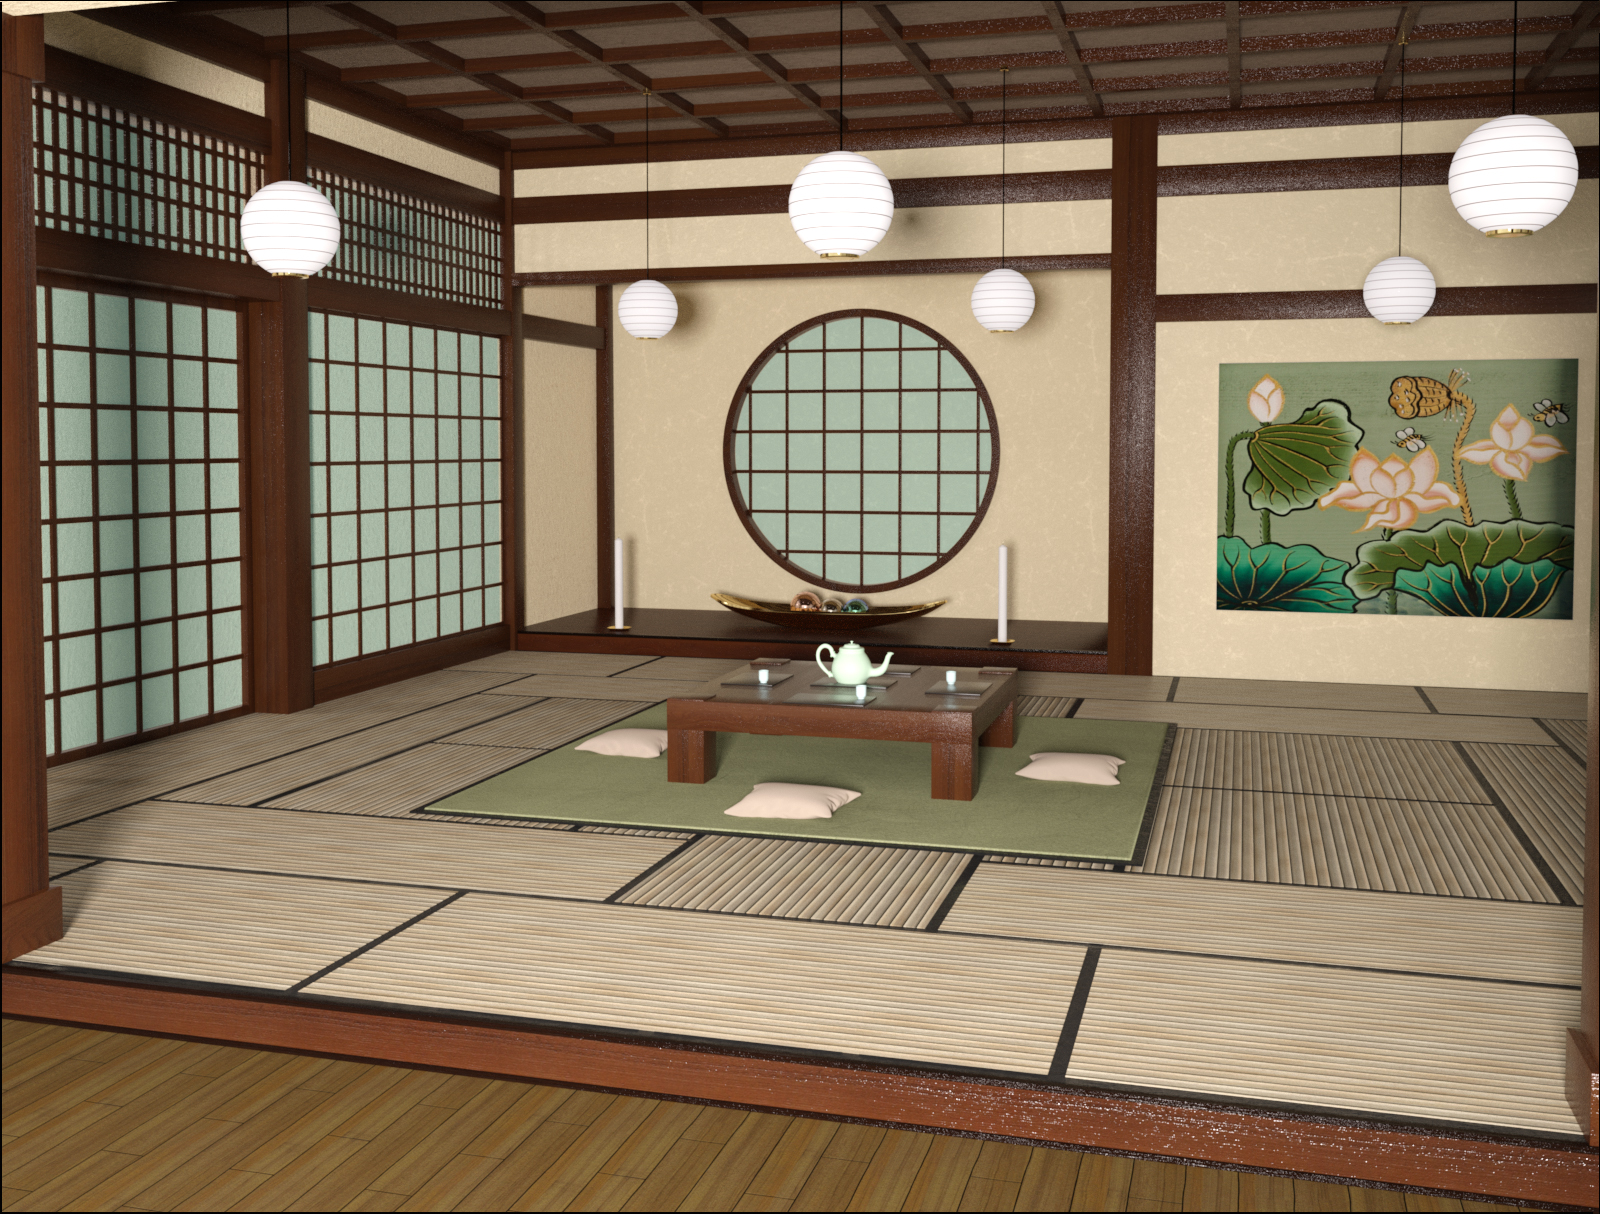 Z Meditation Room by: Zeddicuss, 3D Models by Daz 3D